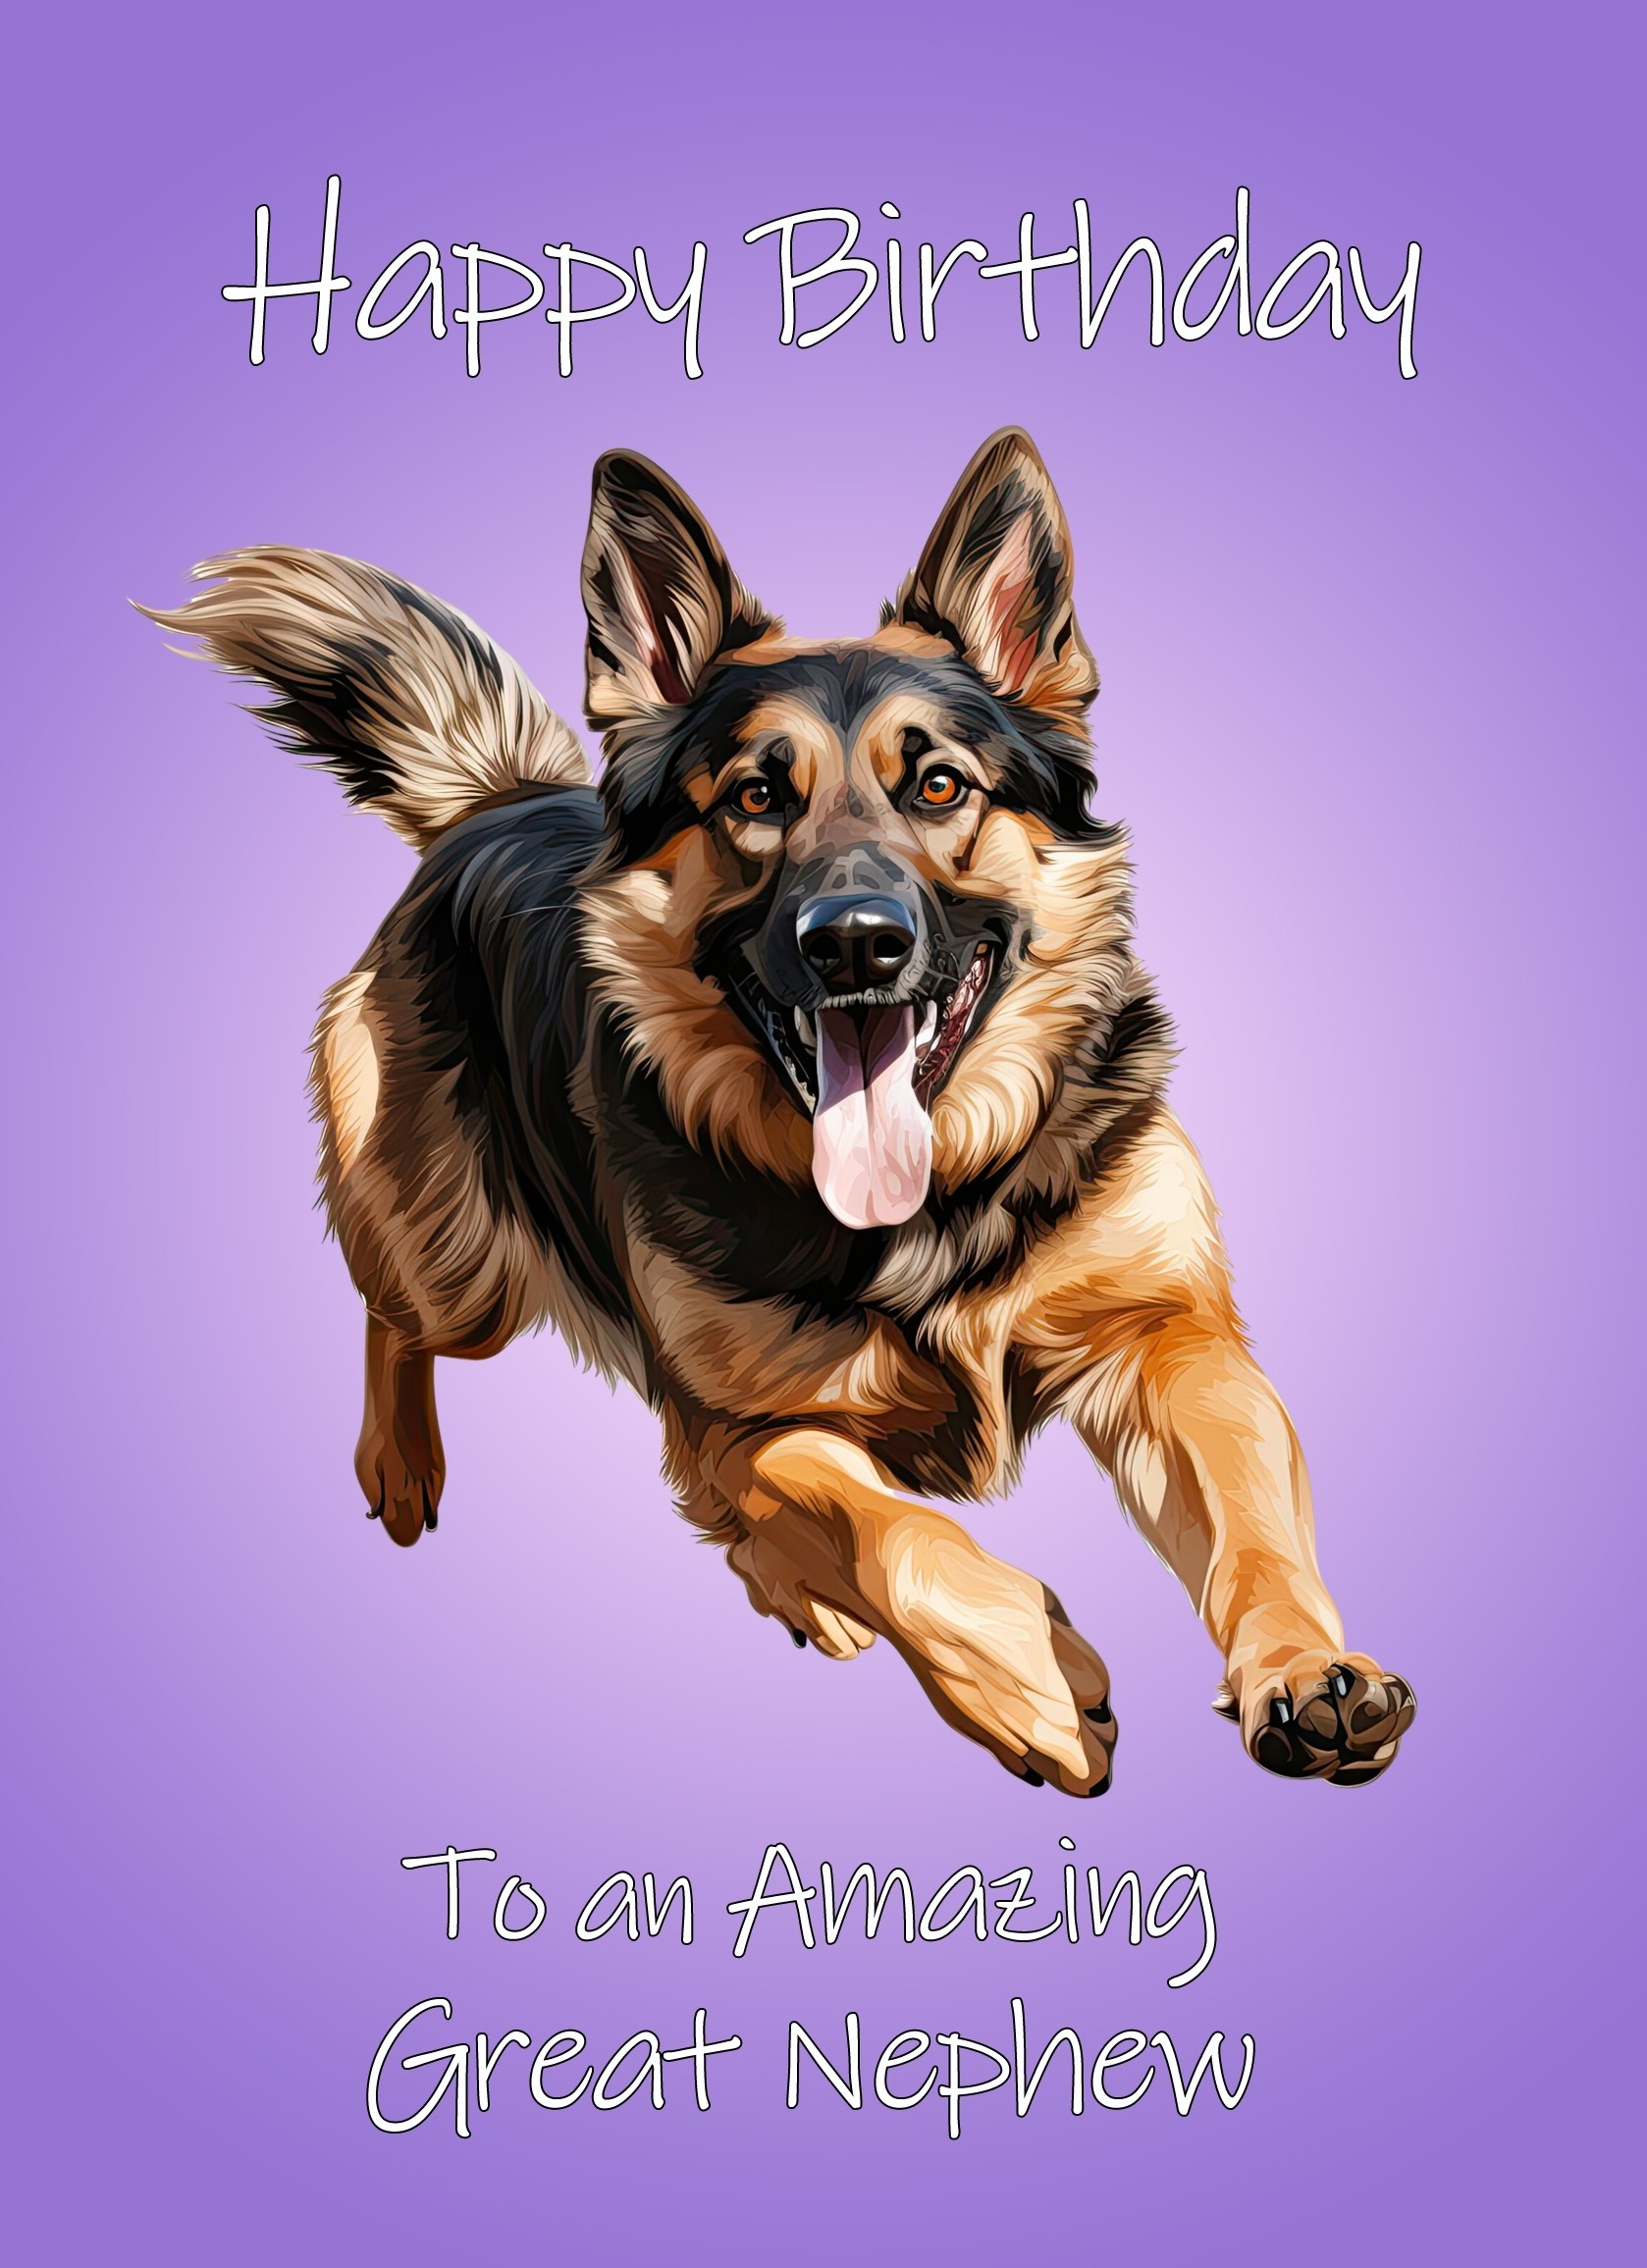 German Shepherd Dog Birthday Card For Great Nephew